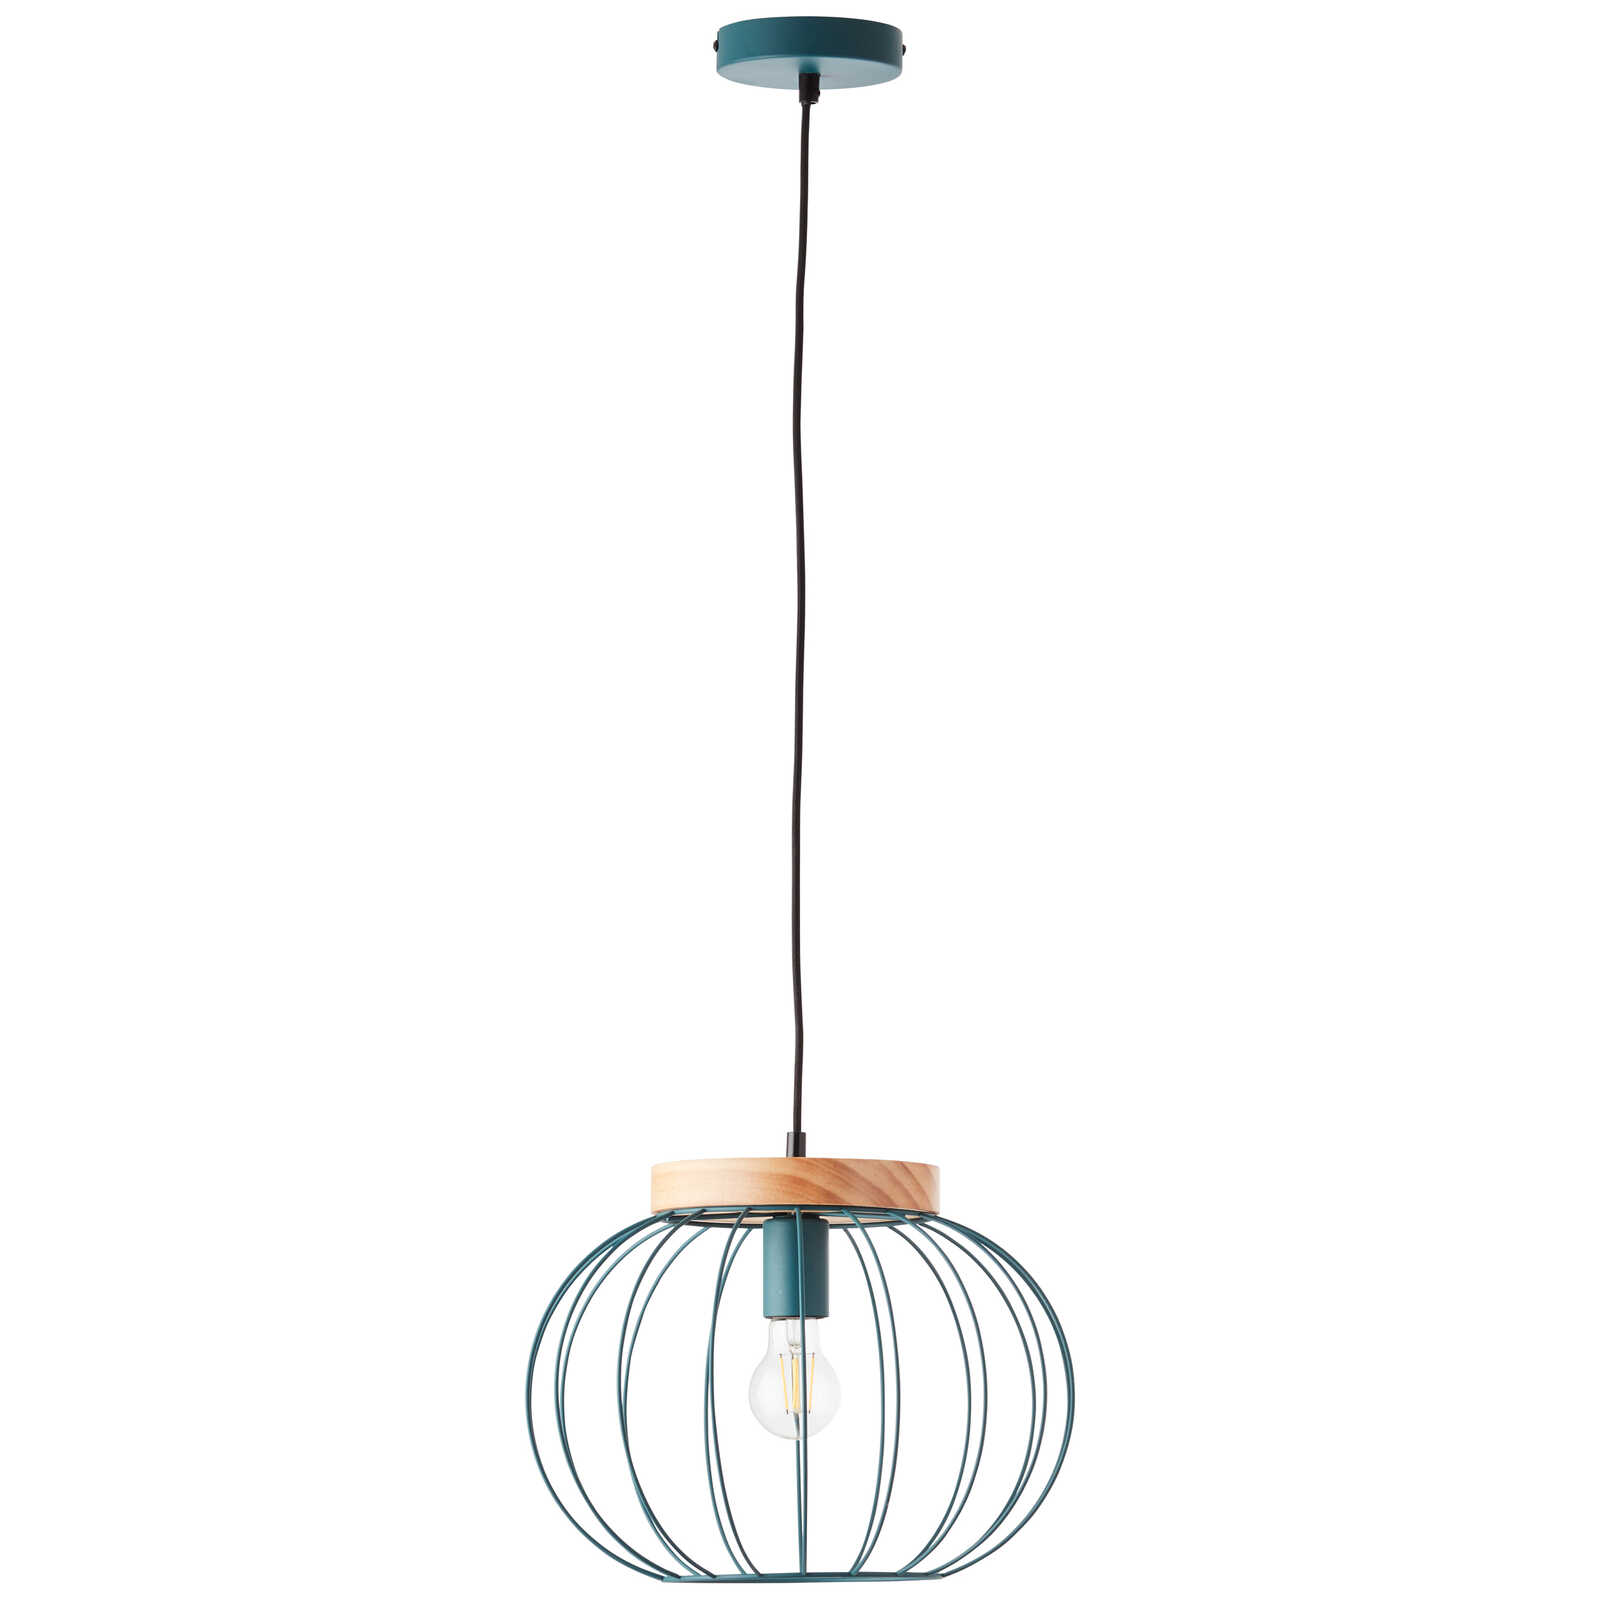             Houten hanglamp - Oliver 1 - Blauw
        